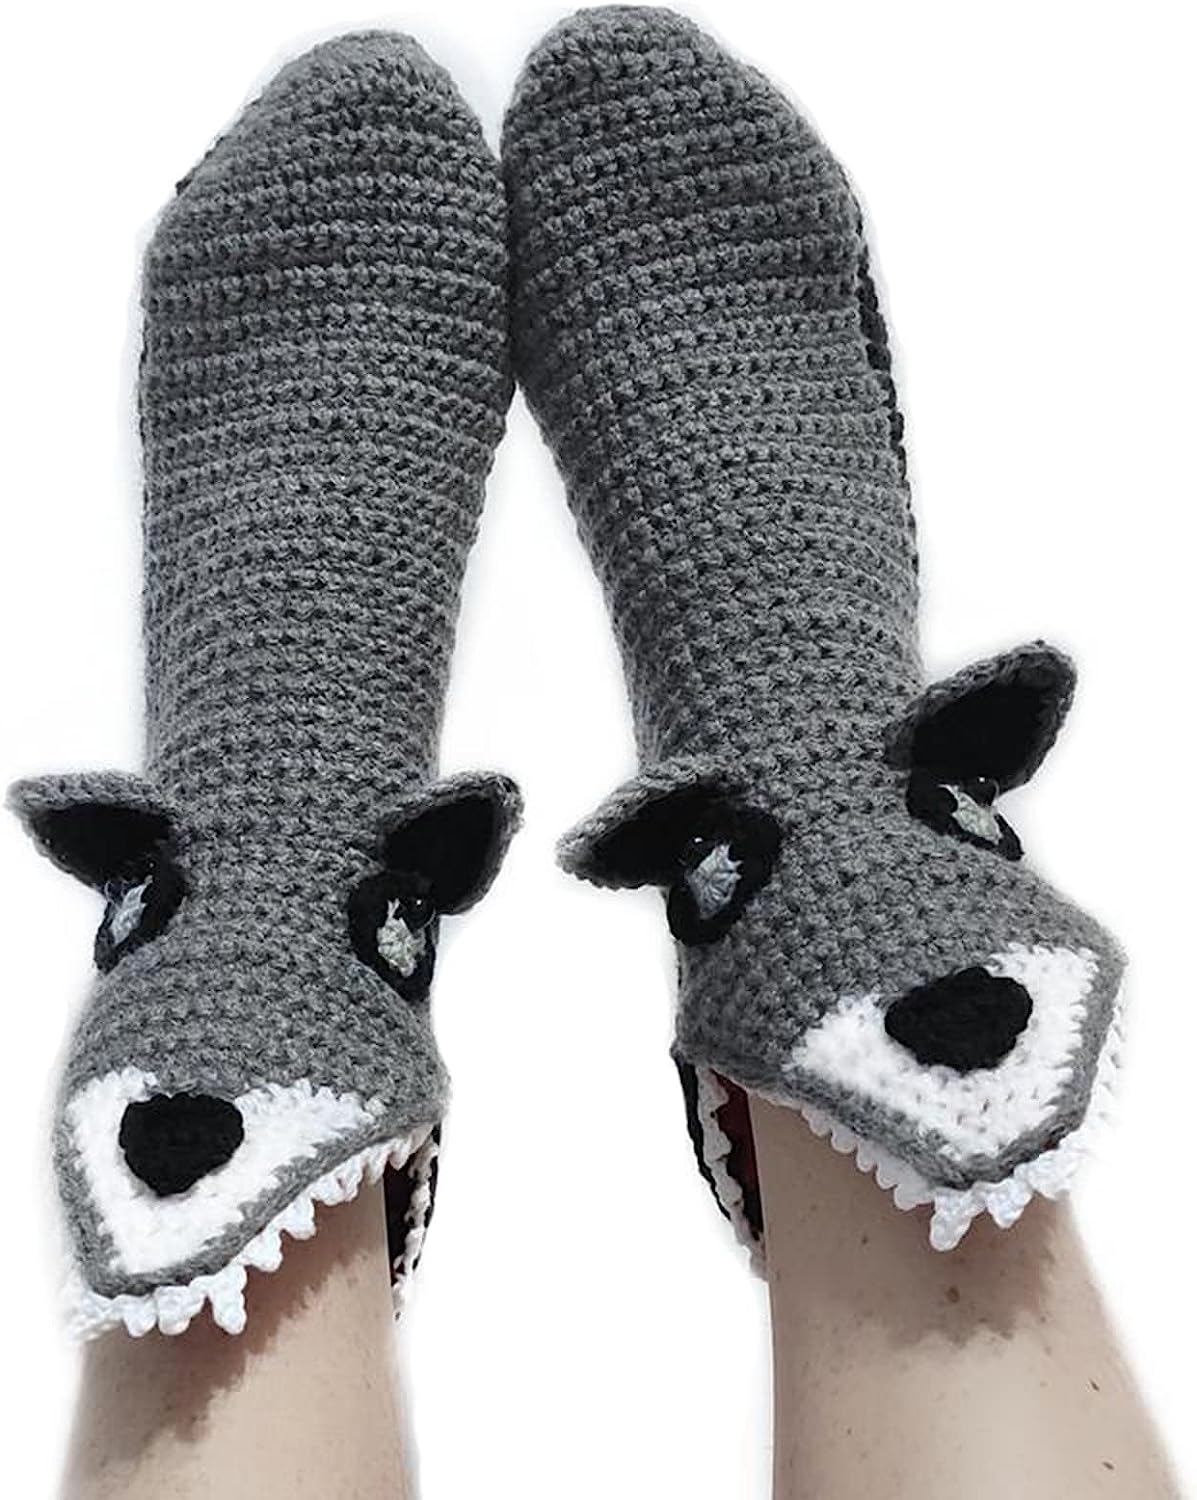 THATLILSHOP One Size / Wolf Women Men Novelty Animal Pattern Socks Crazy Funny Knit Crocodile Socks Funny Gifts